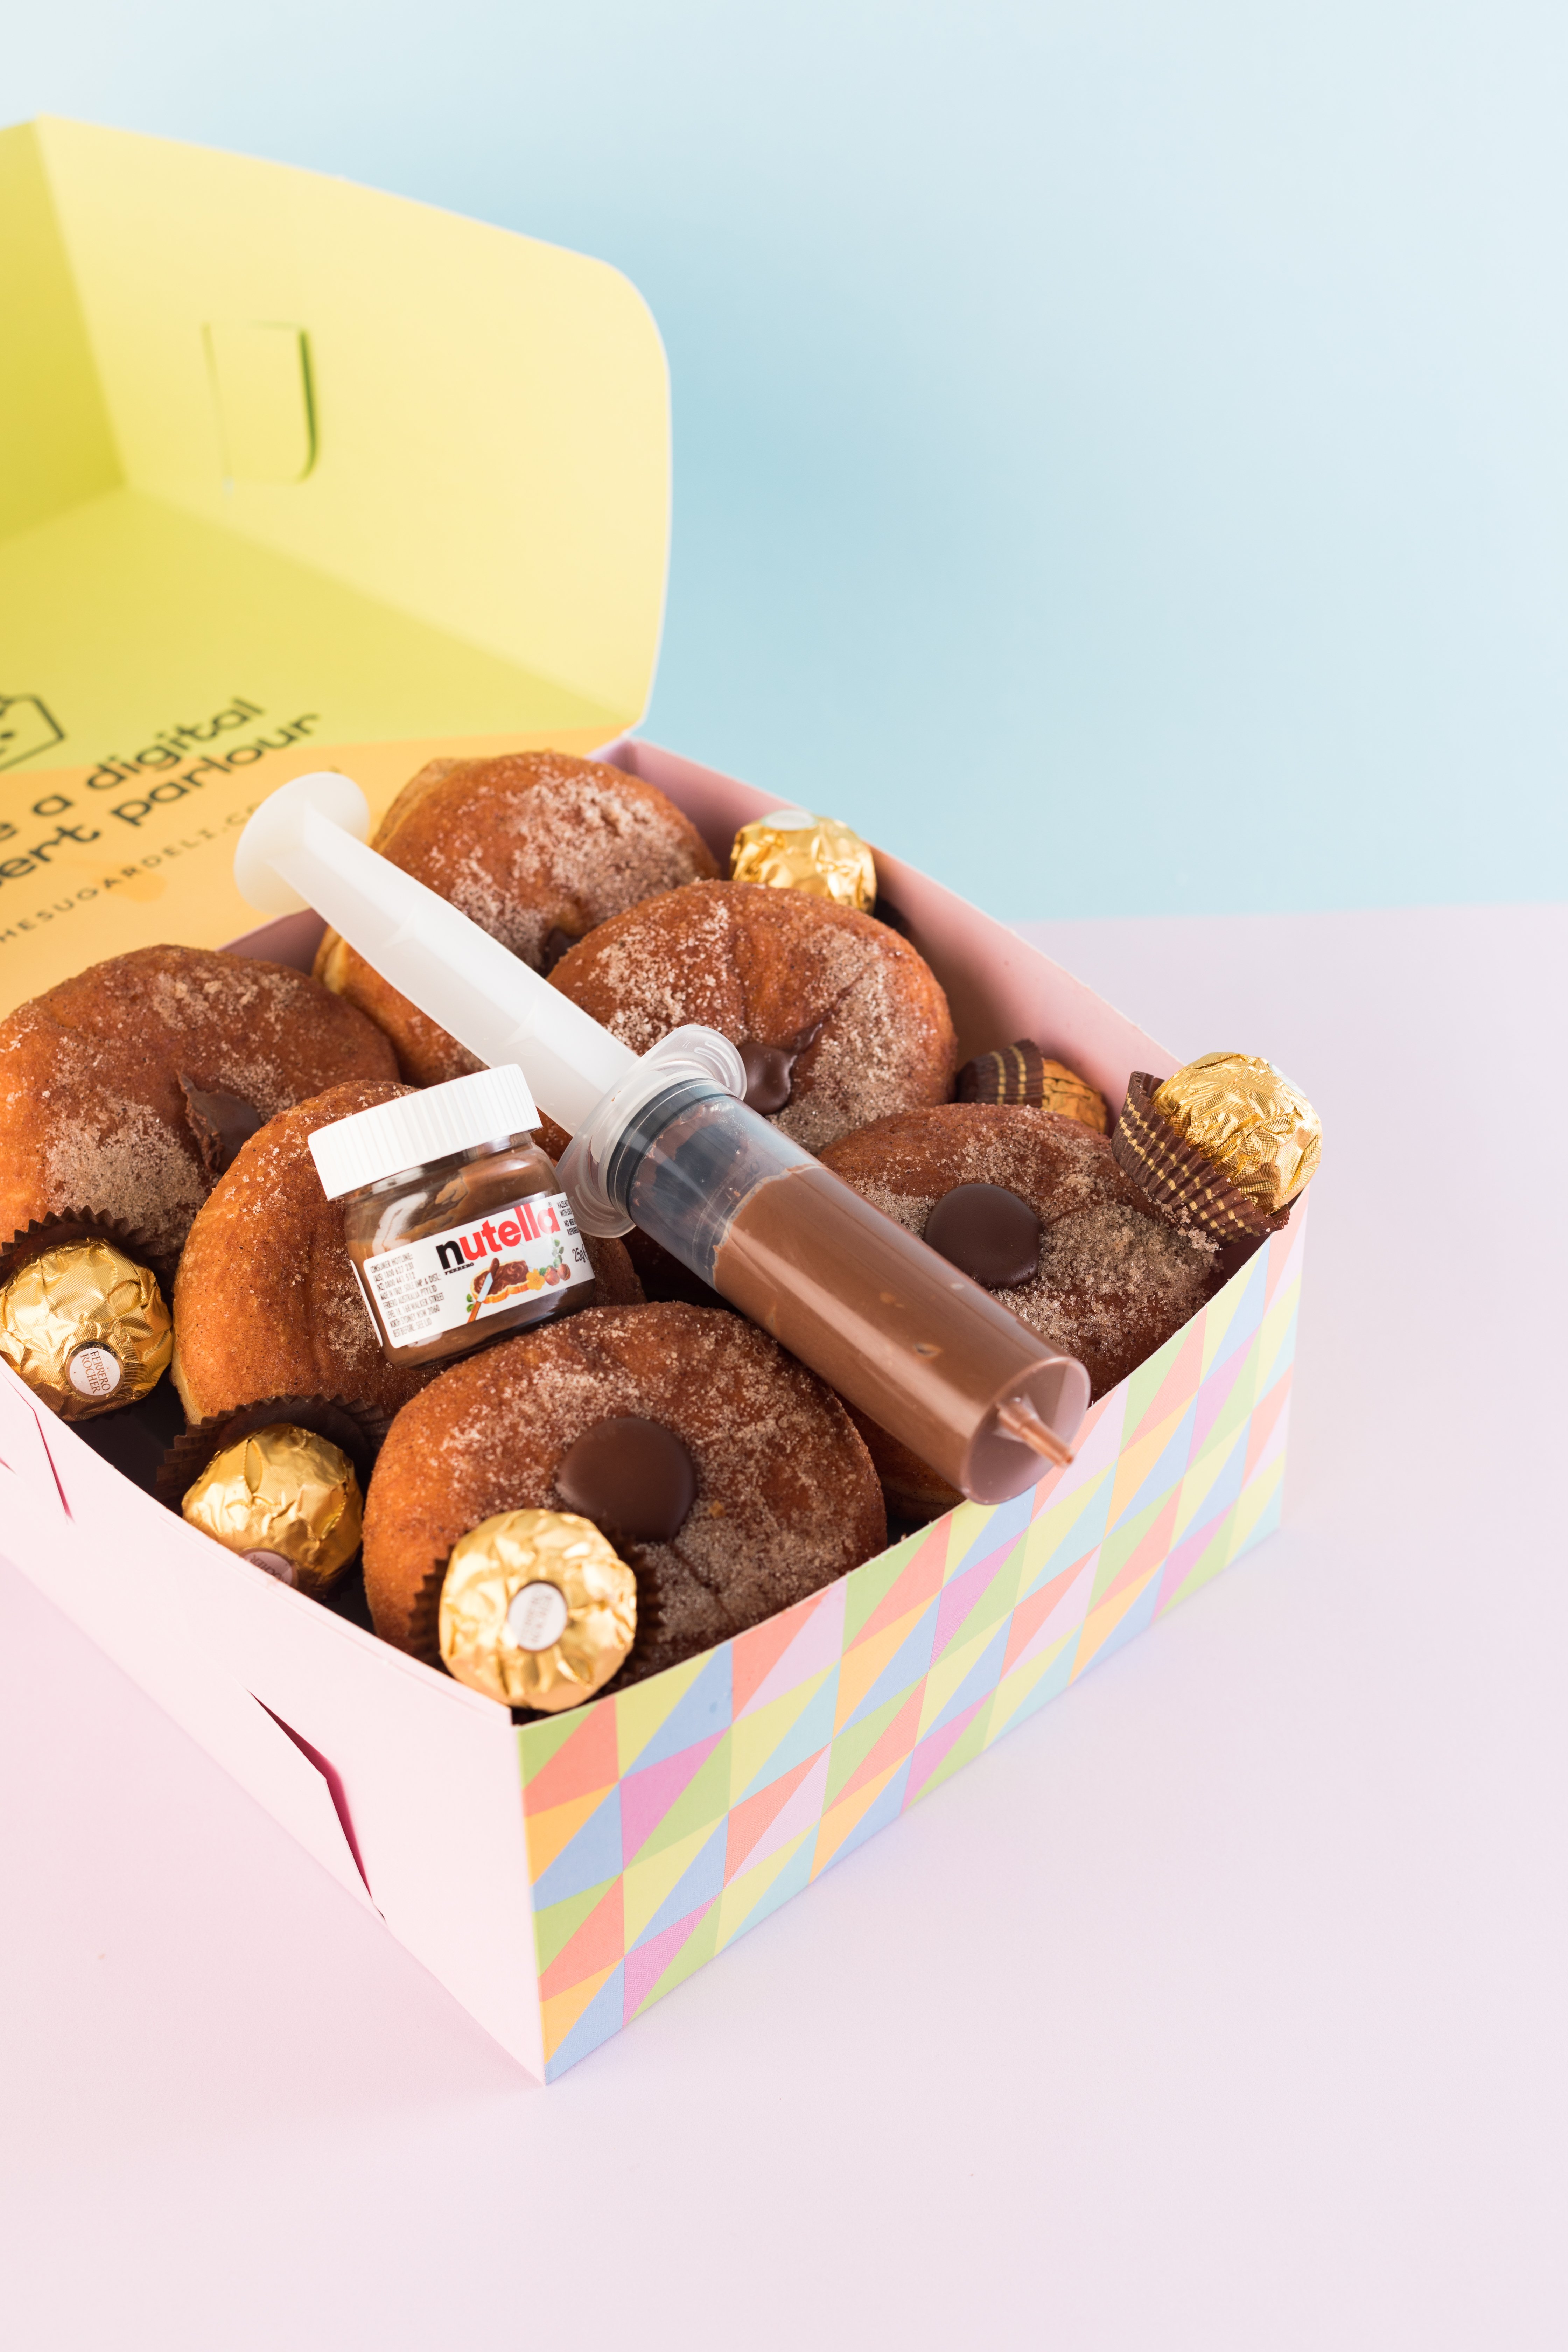 The Sugar Deli: Delivering insta-worthy drool-inducing sweet treats to your door!